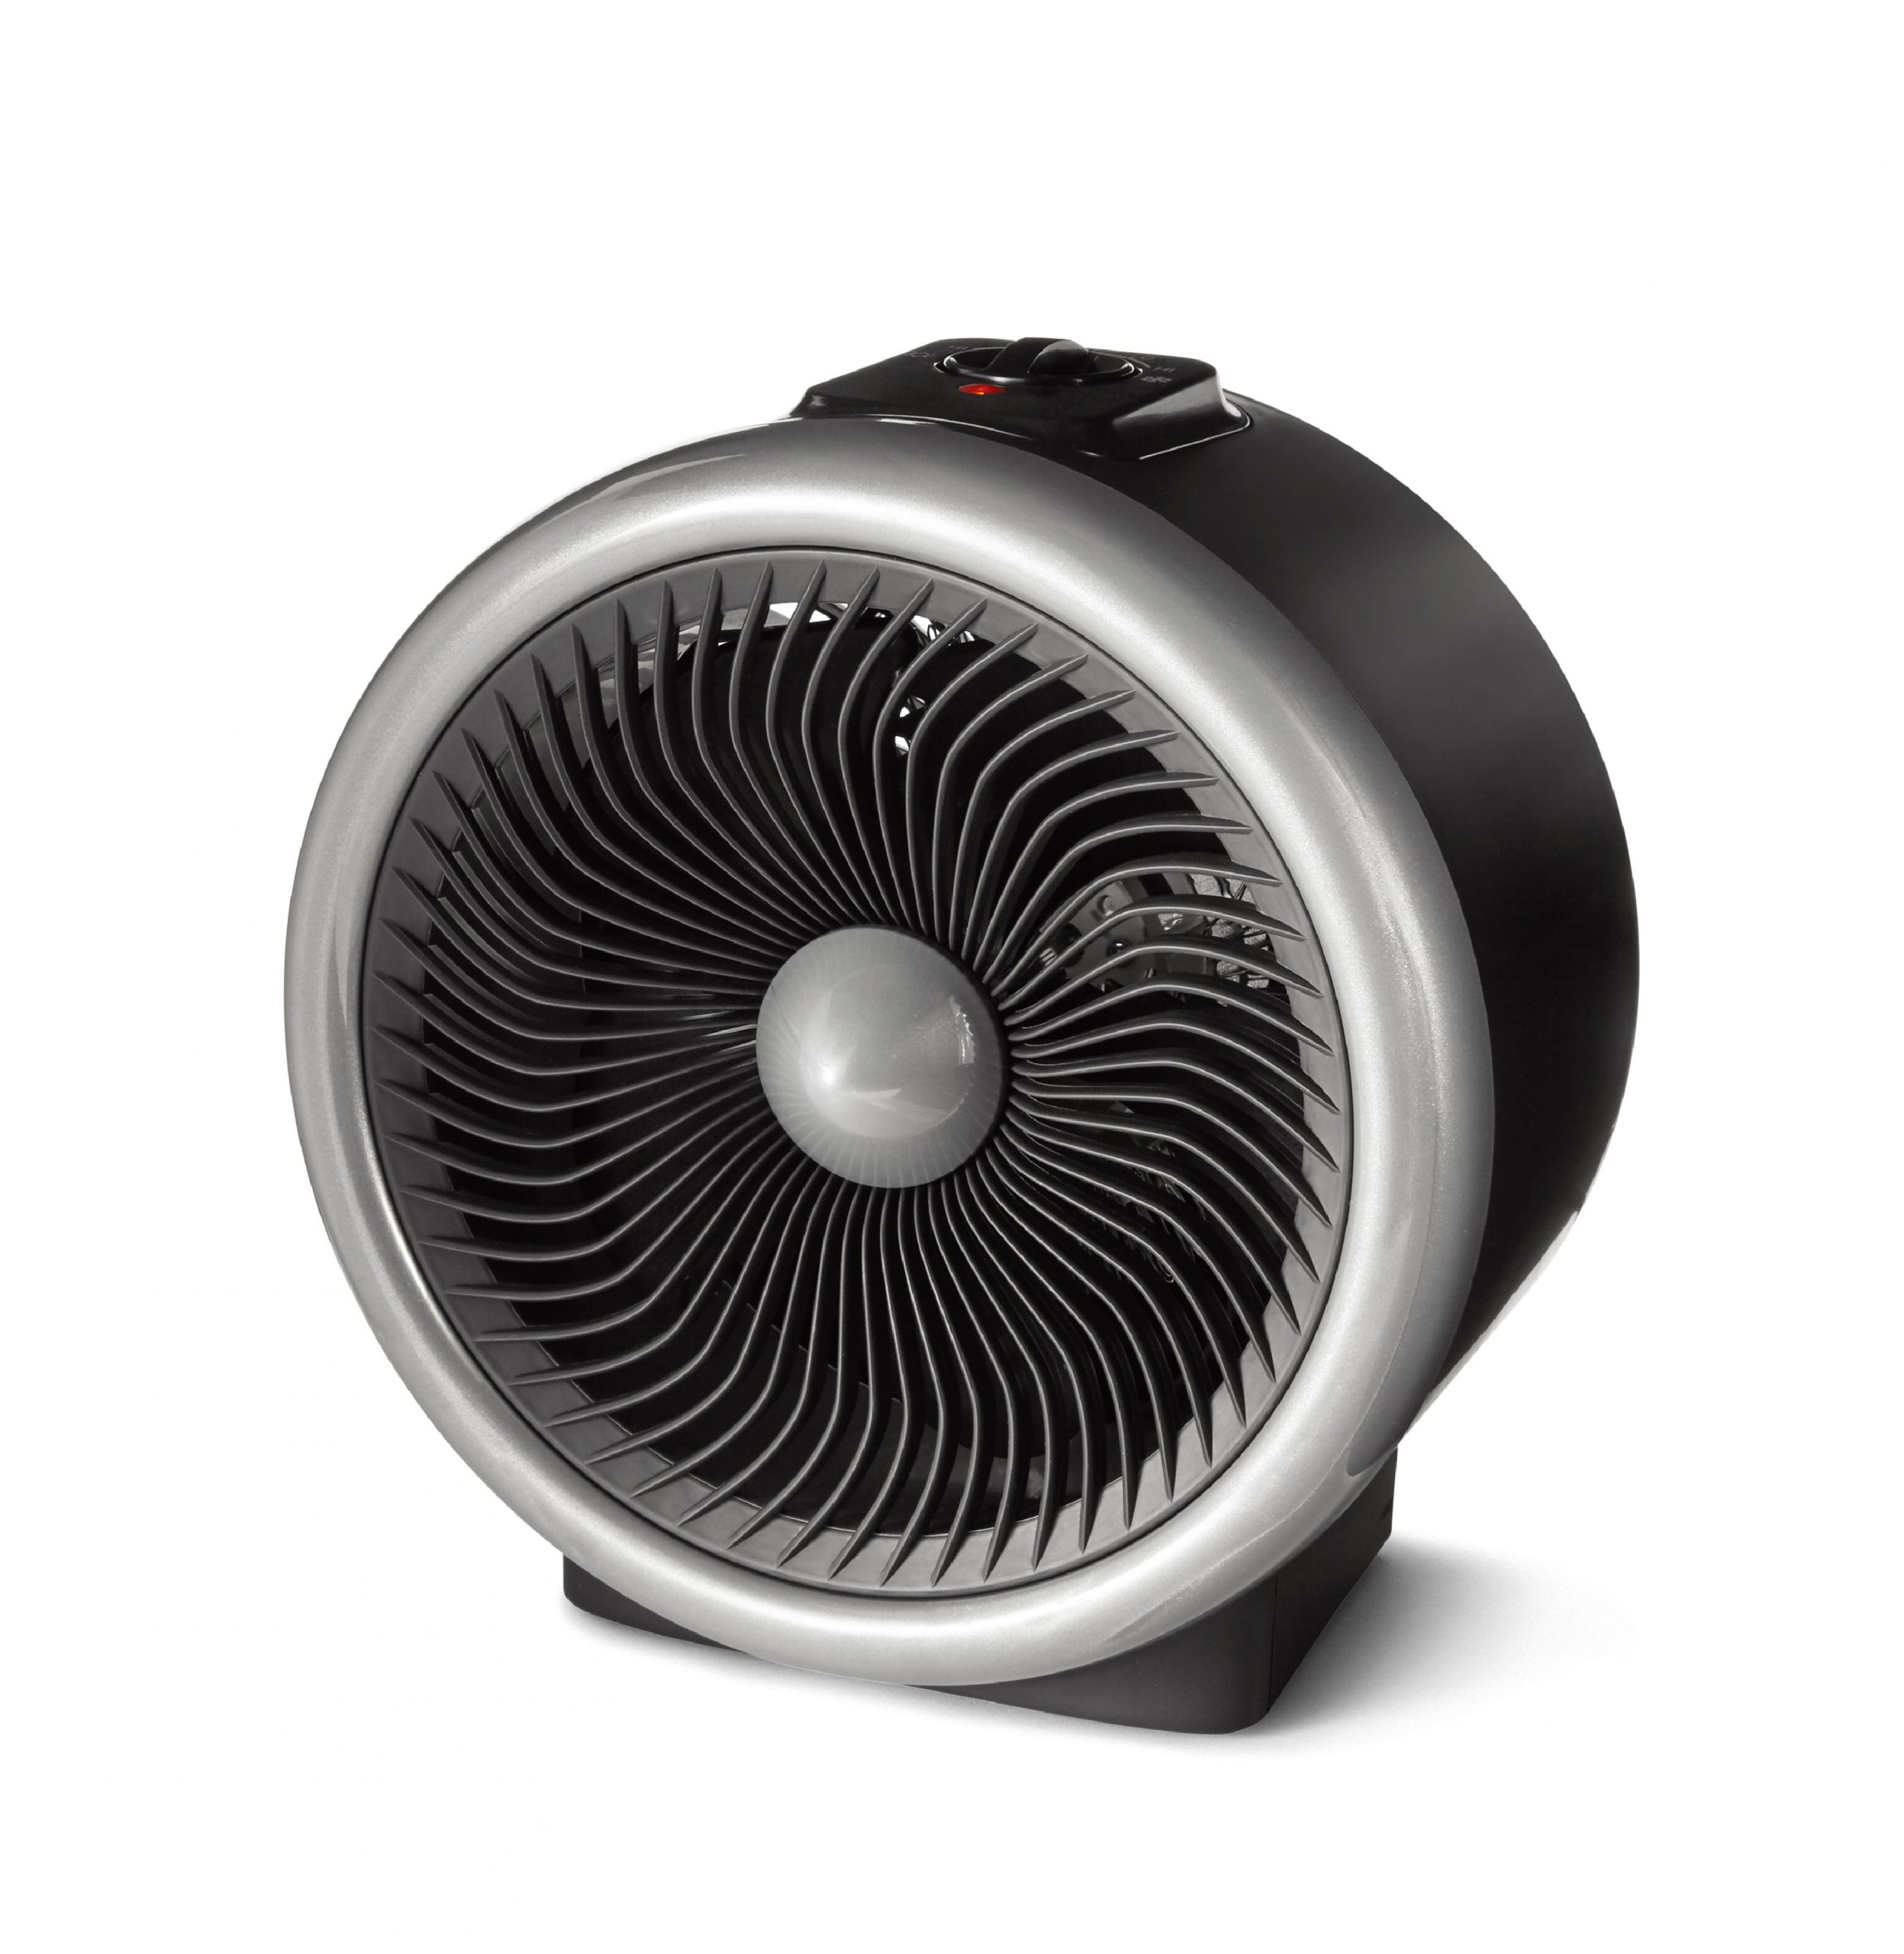 Mainstays 2 In 1 Portable Heater Fan 900 1500w Indoor Black Walmart within measurements 3164 X 3247